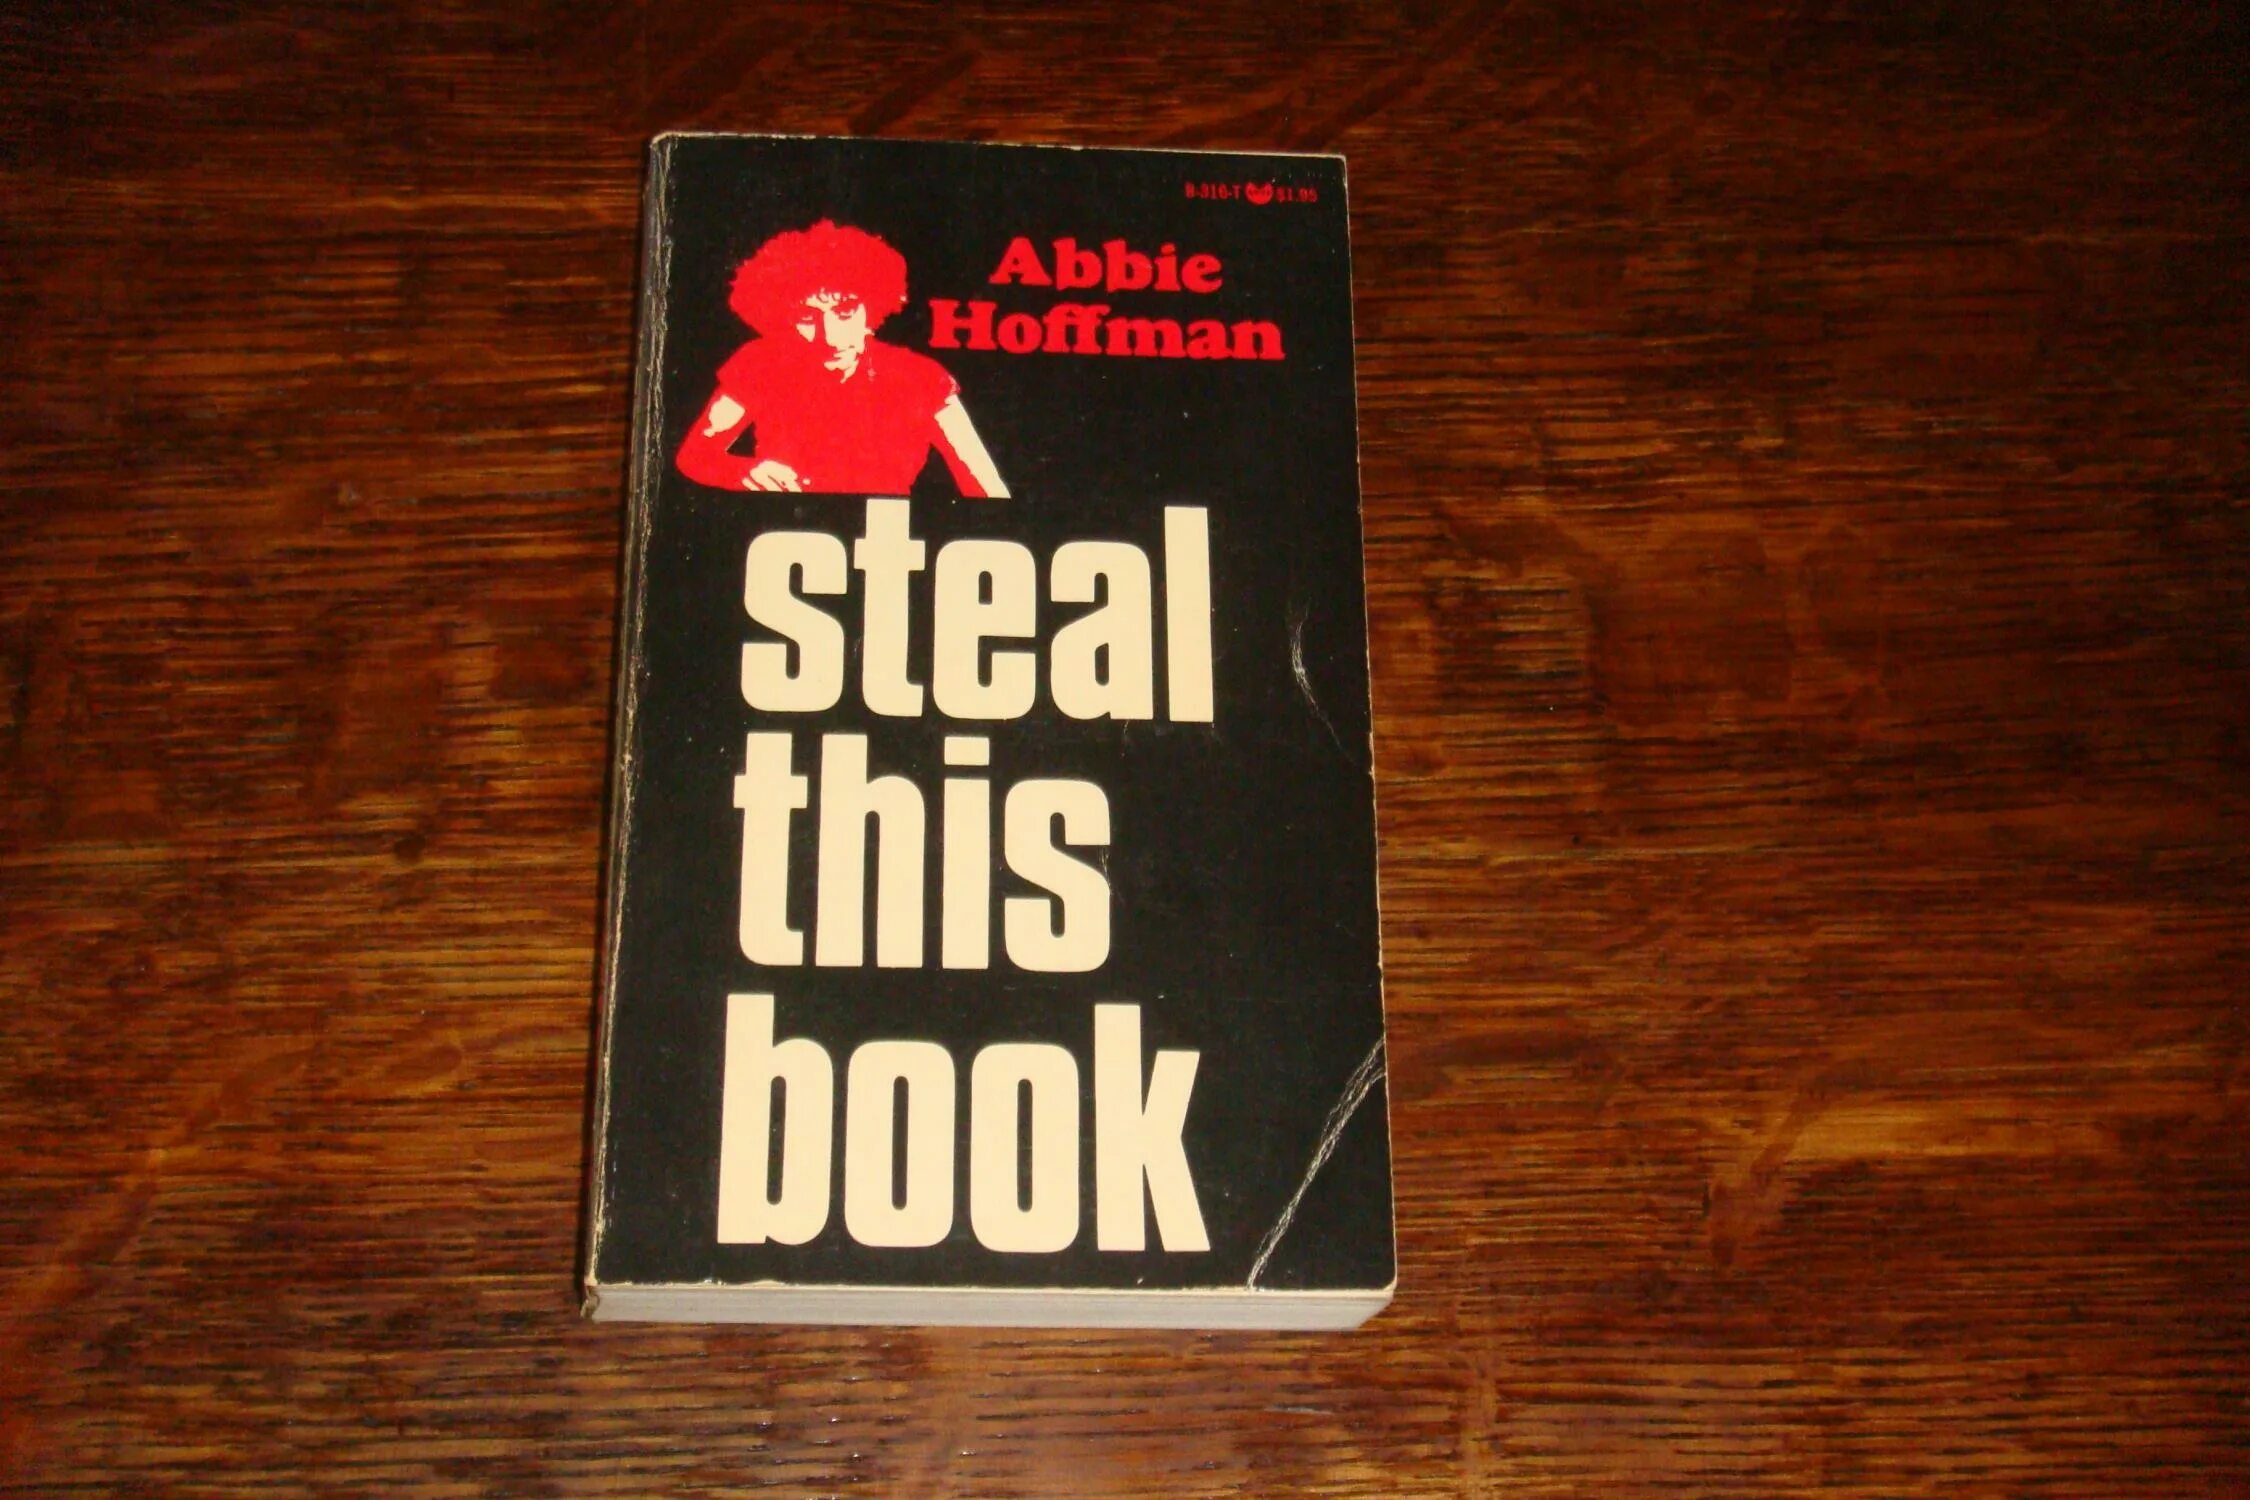 This book перевод. Эбби Хоффман сопри эту книгу. Steal this book. Сопри эту книгу Хоффмана картинки. Эбби Хоффман укради эту книгу купить.